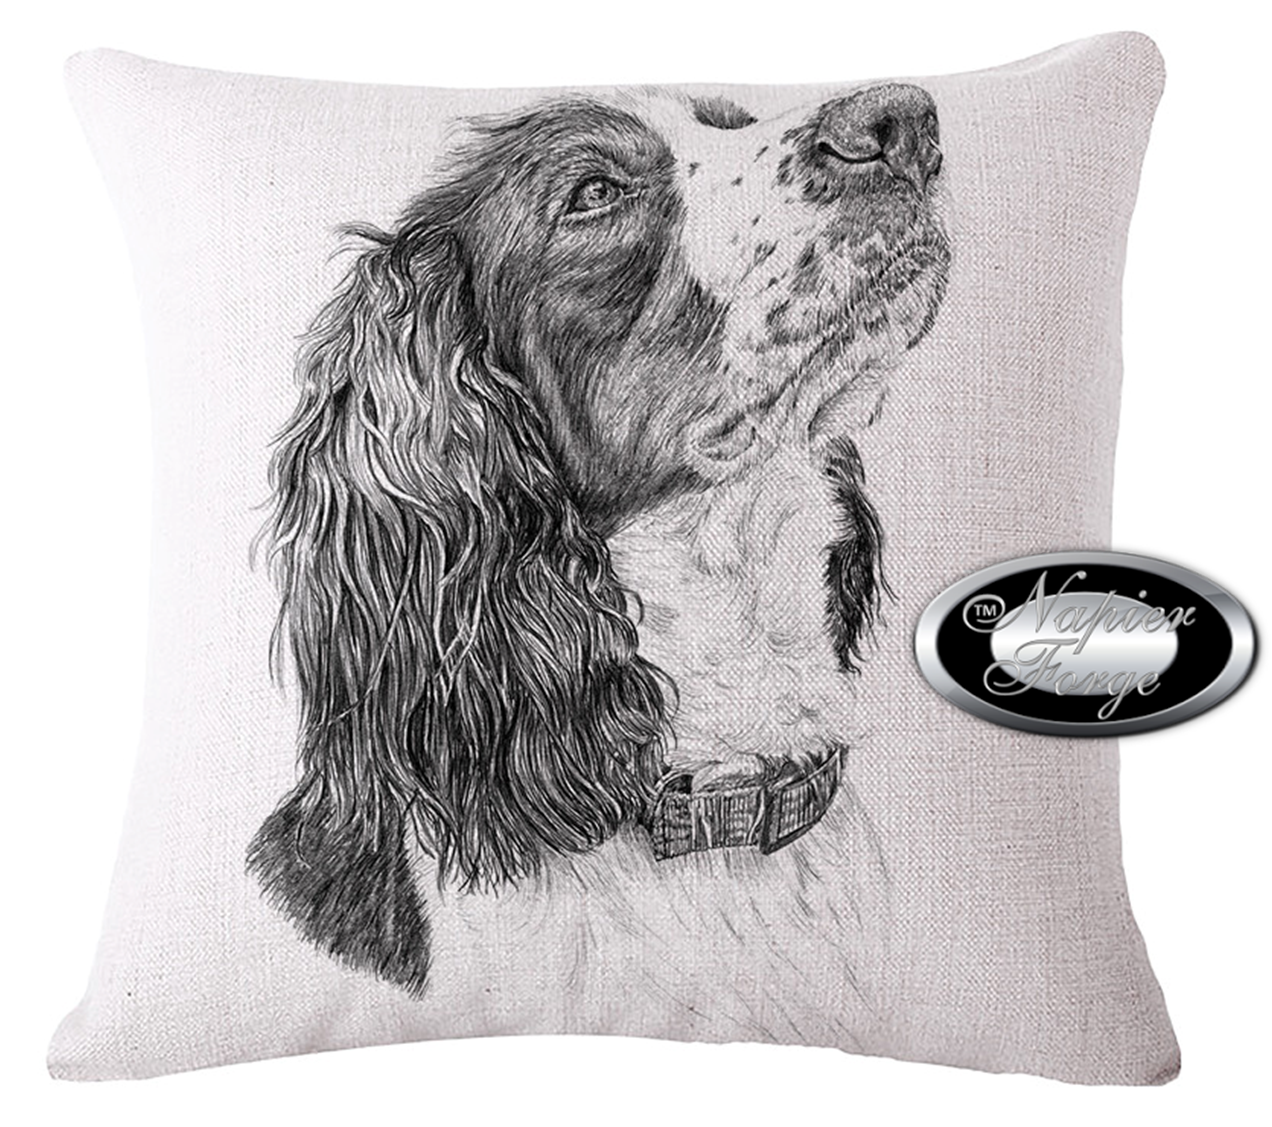 Farmhouse Cotton Linen Blend Cushion Cover 45cm x 45cm - Design Artists Springer Spaniel *Free Shipping